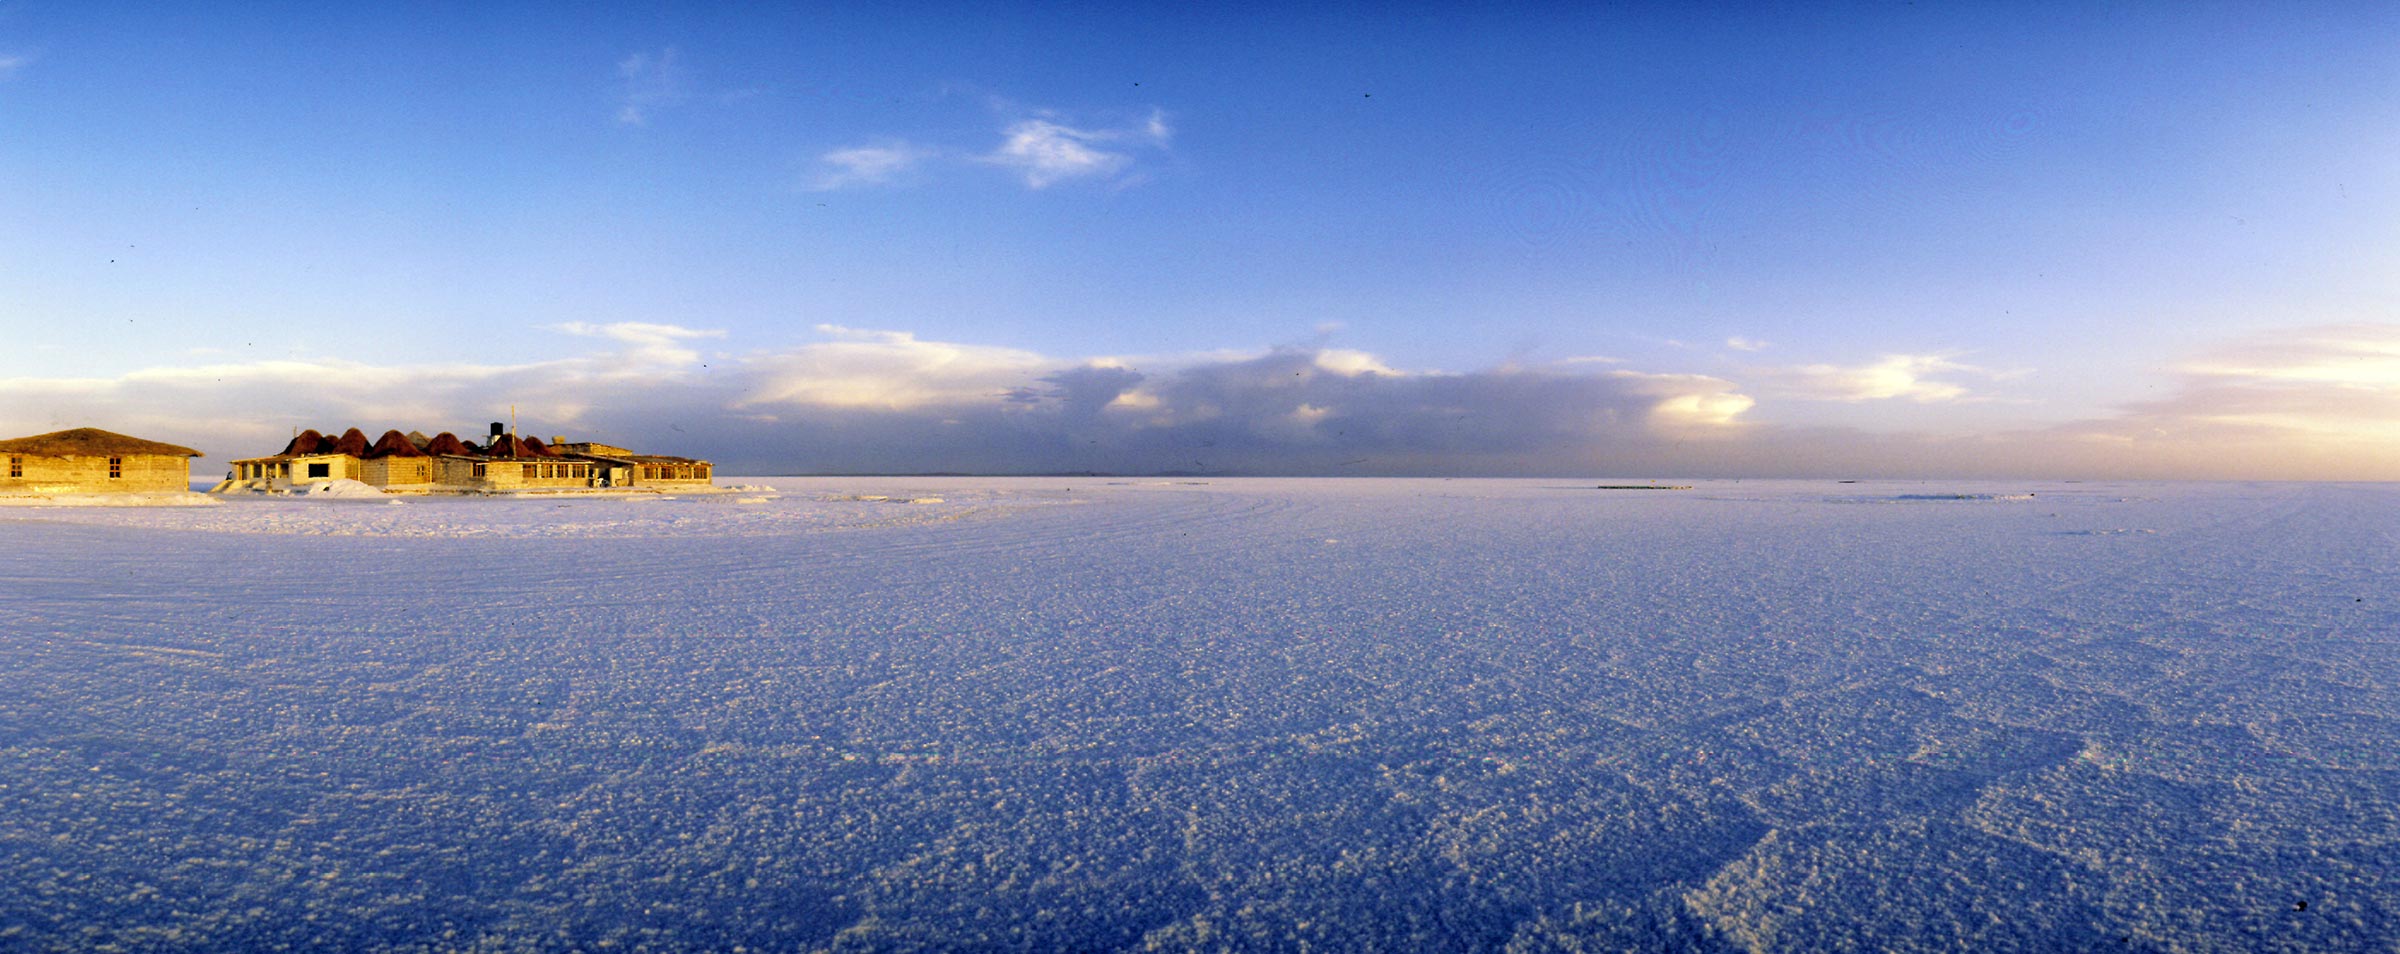 Bolivia. Uyuni saltslette. Panorama med det gamle salthotellet. Foto